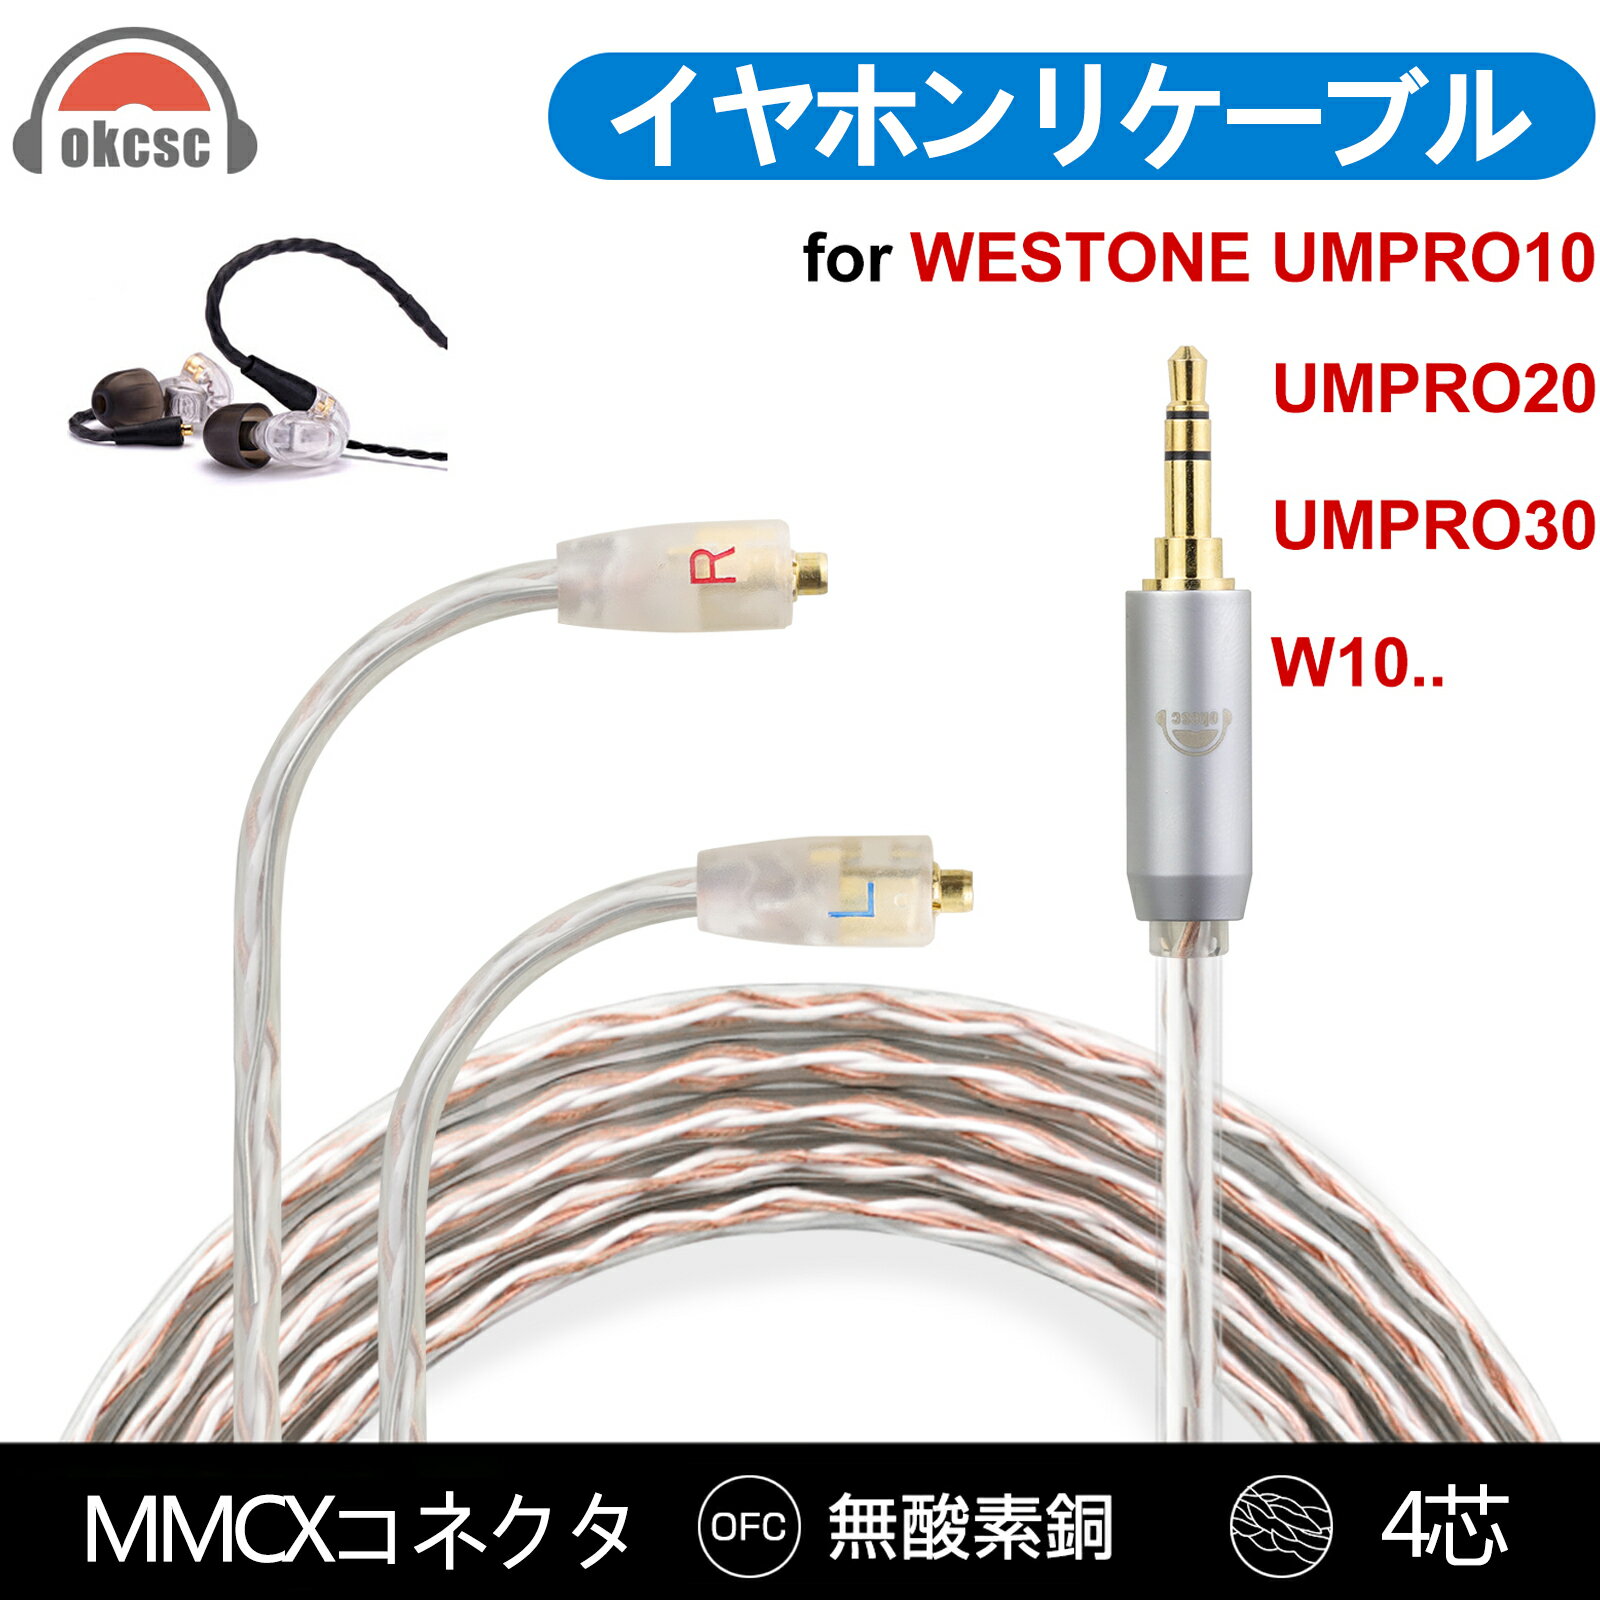 okcsc W40-MMCX リケーブル mmcx ケーブル イヤホン 4芯 金メッキ線 Westone用 UMPRO10 W10 20 30 などに適合する 2.5mm 3.5mm 4.4mm Type-c usb-c